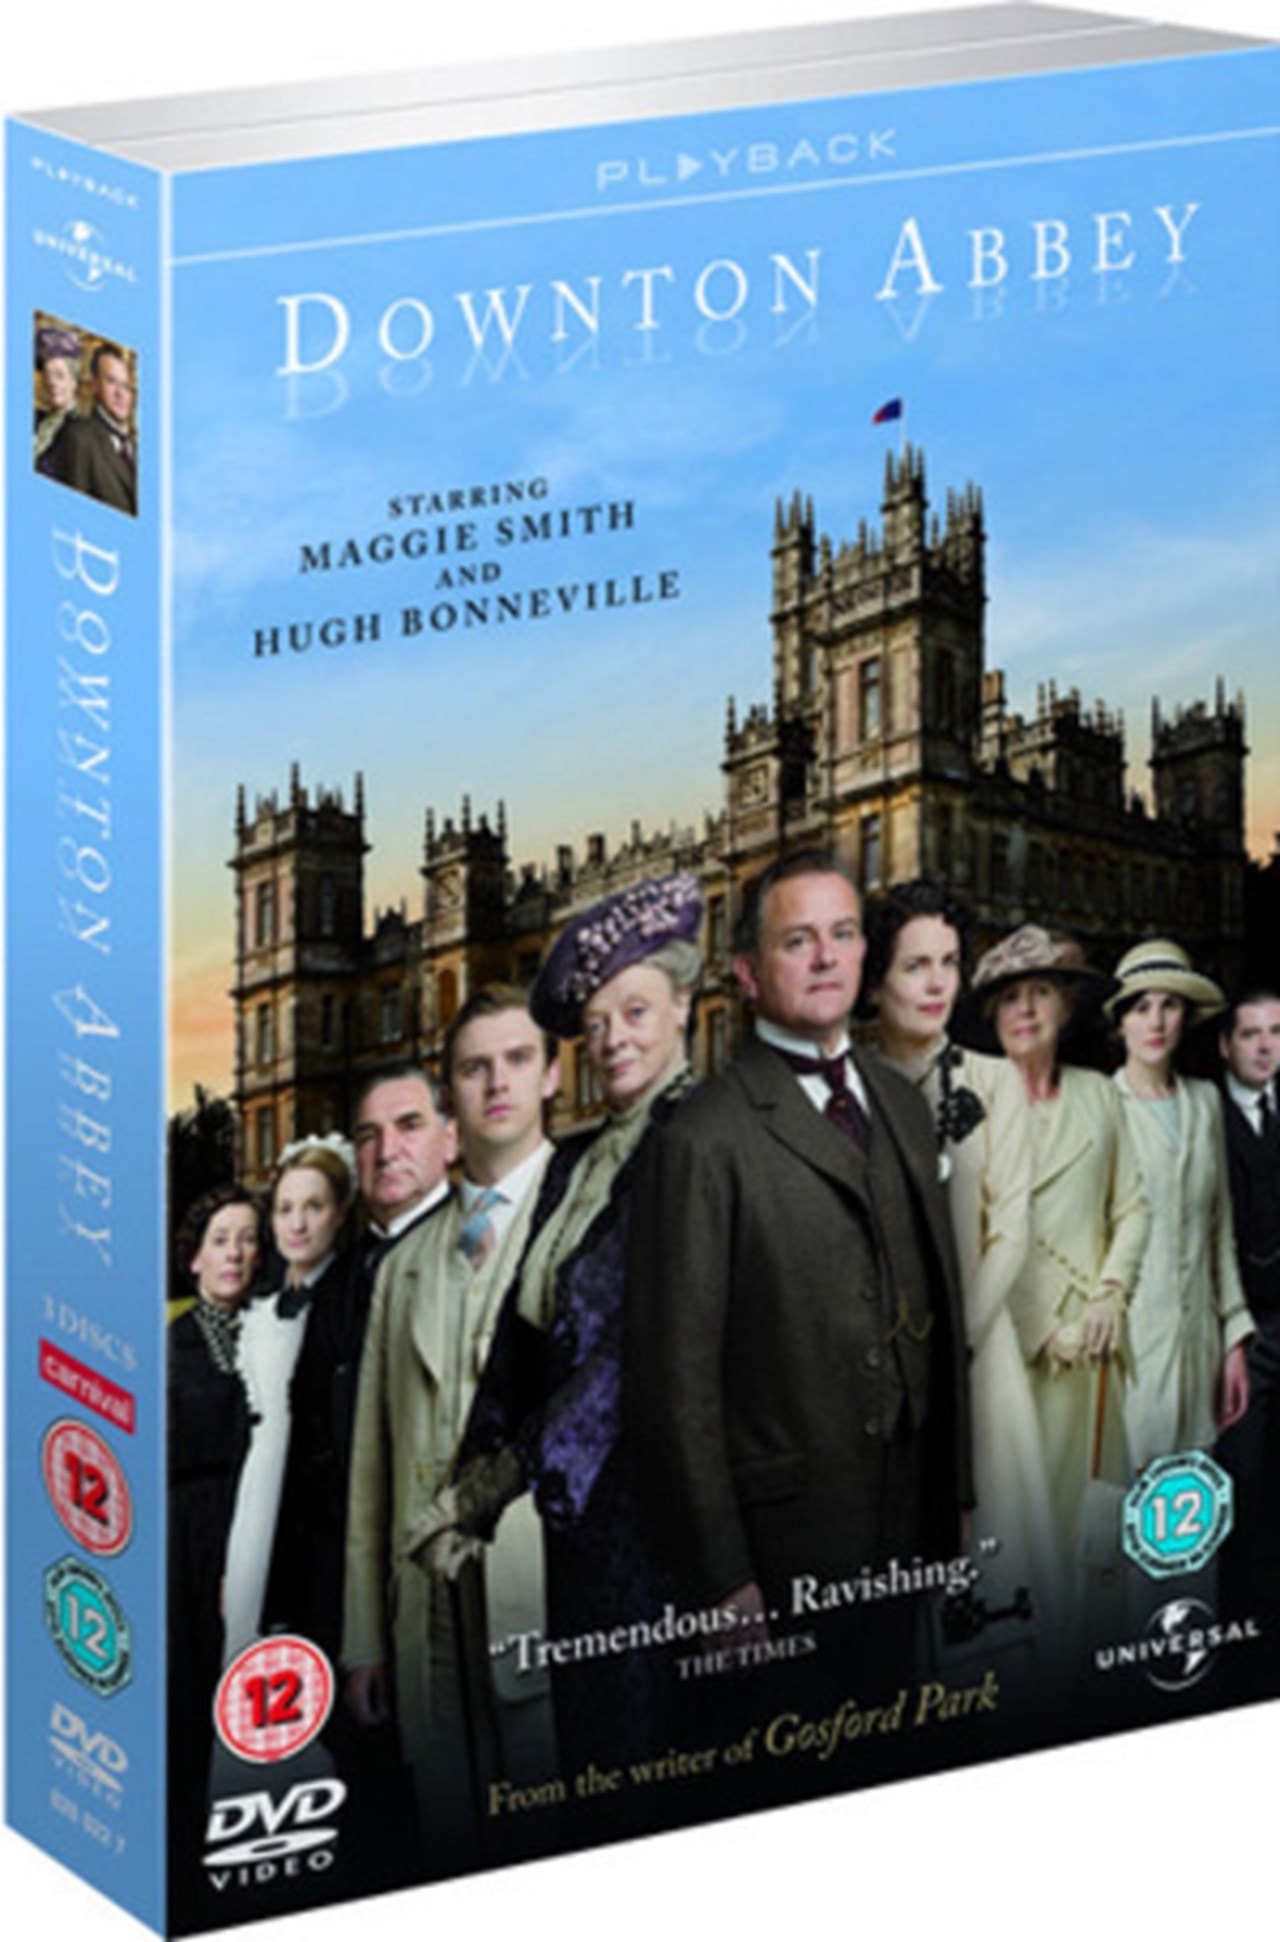 Downton Abbey: Series 1 | DVD Box Set | Free shipping over £20 | HMV Store